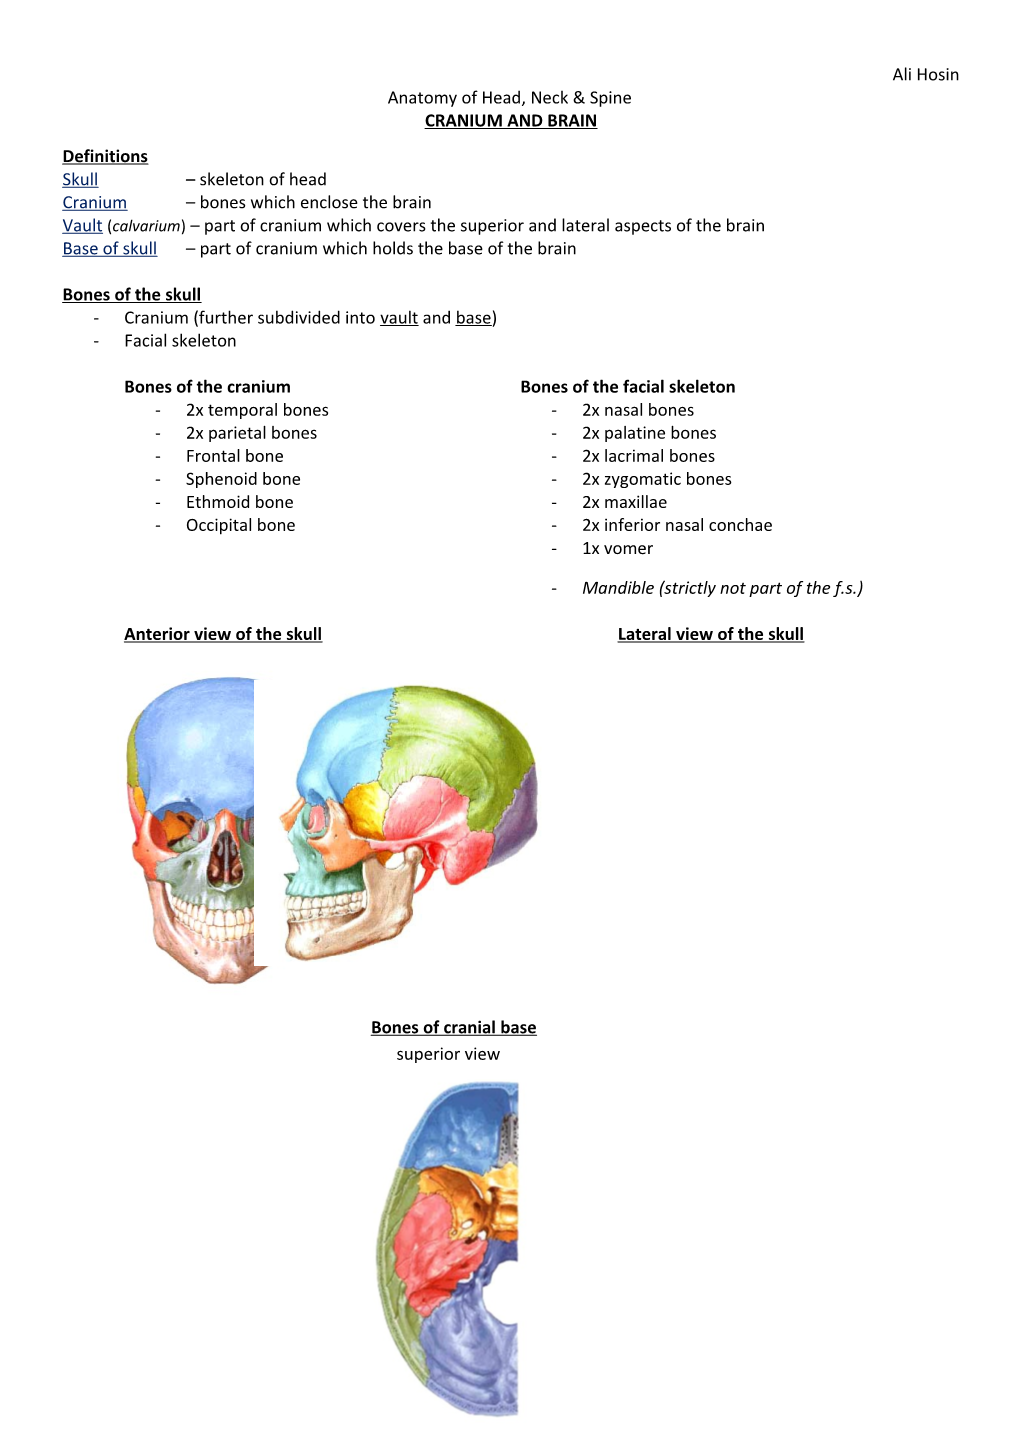 Anatomy of Head, Neck & Spine